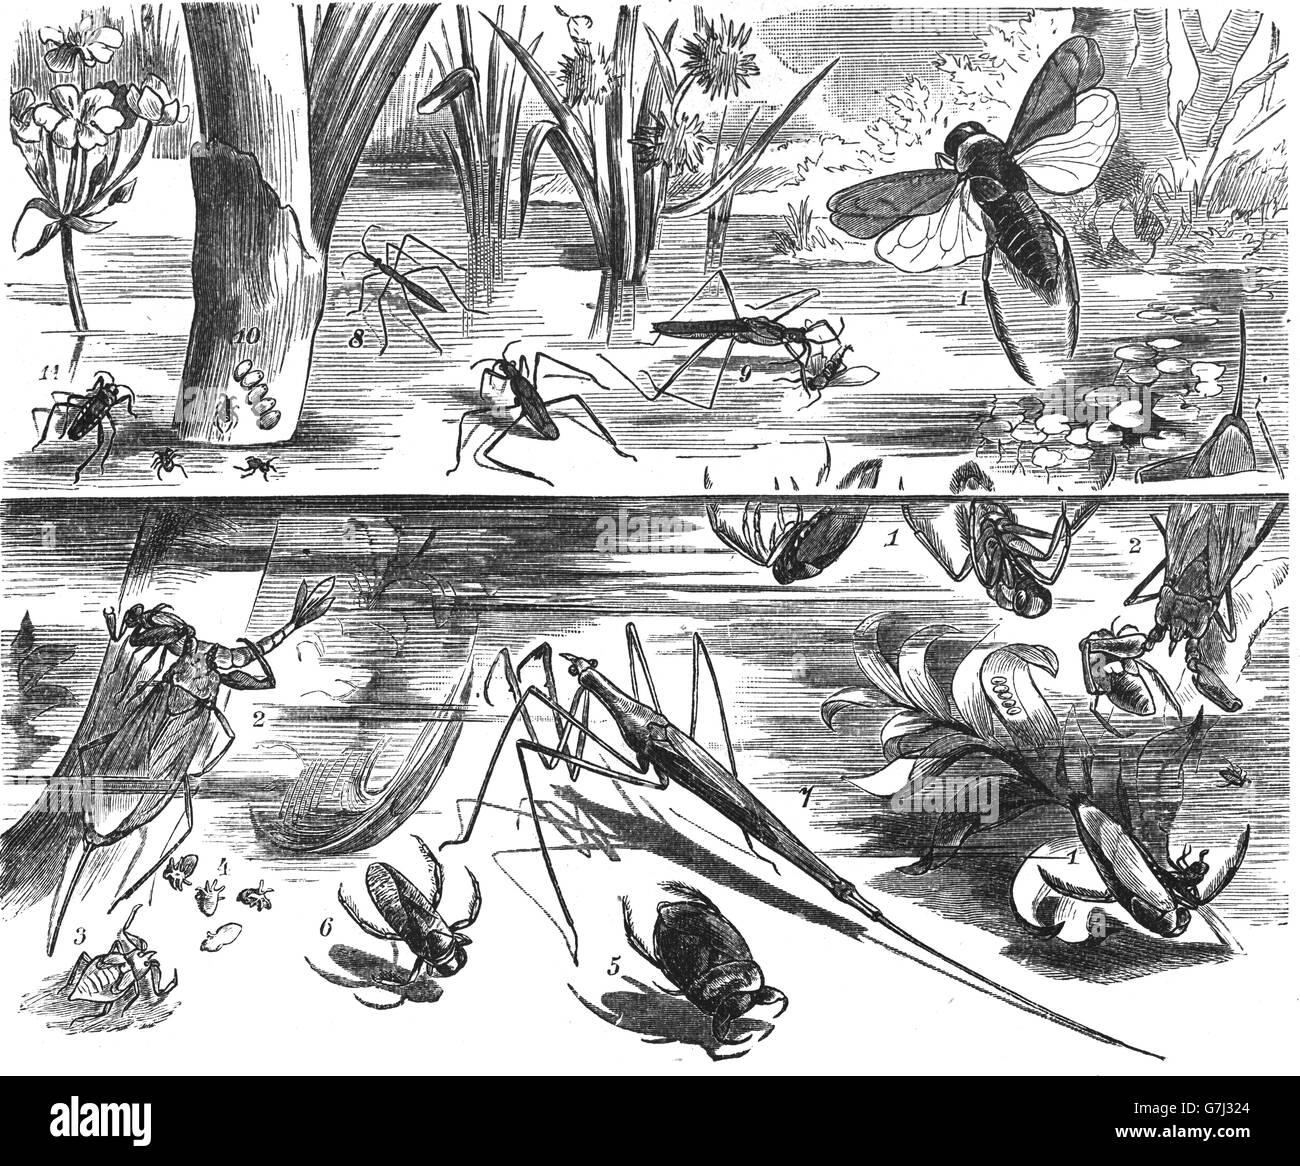 aquatische Heteropteran Fehler in den Teich, Illustration aus Buch datiert 1904 Stockfoto